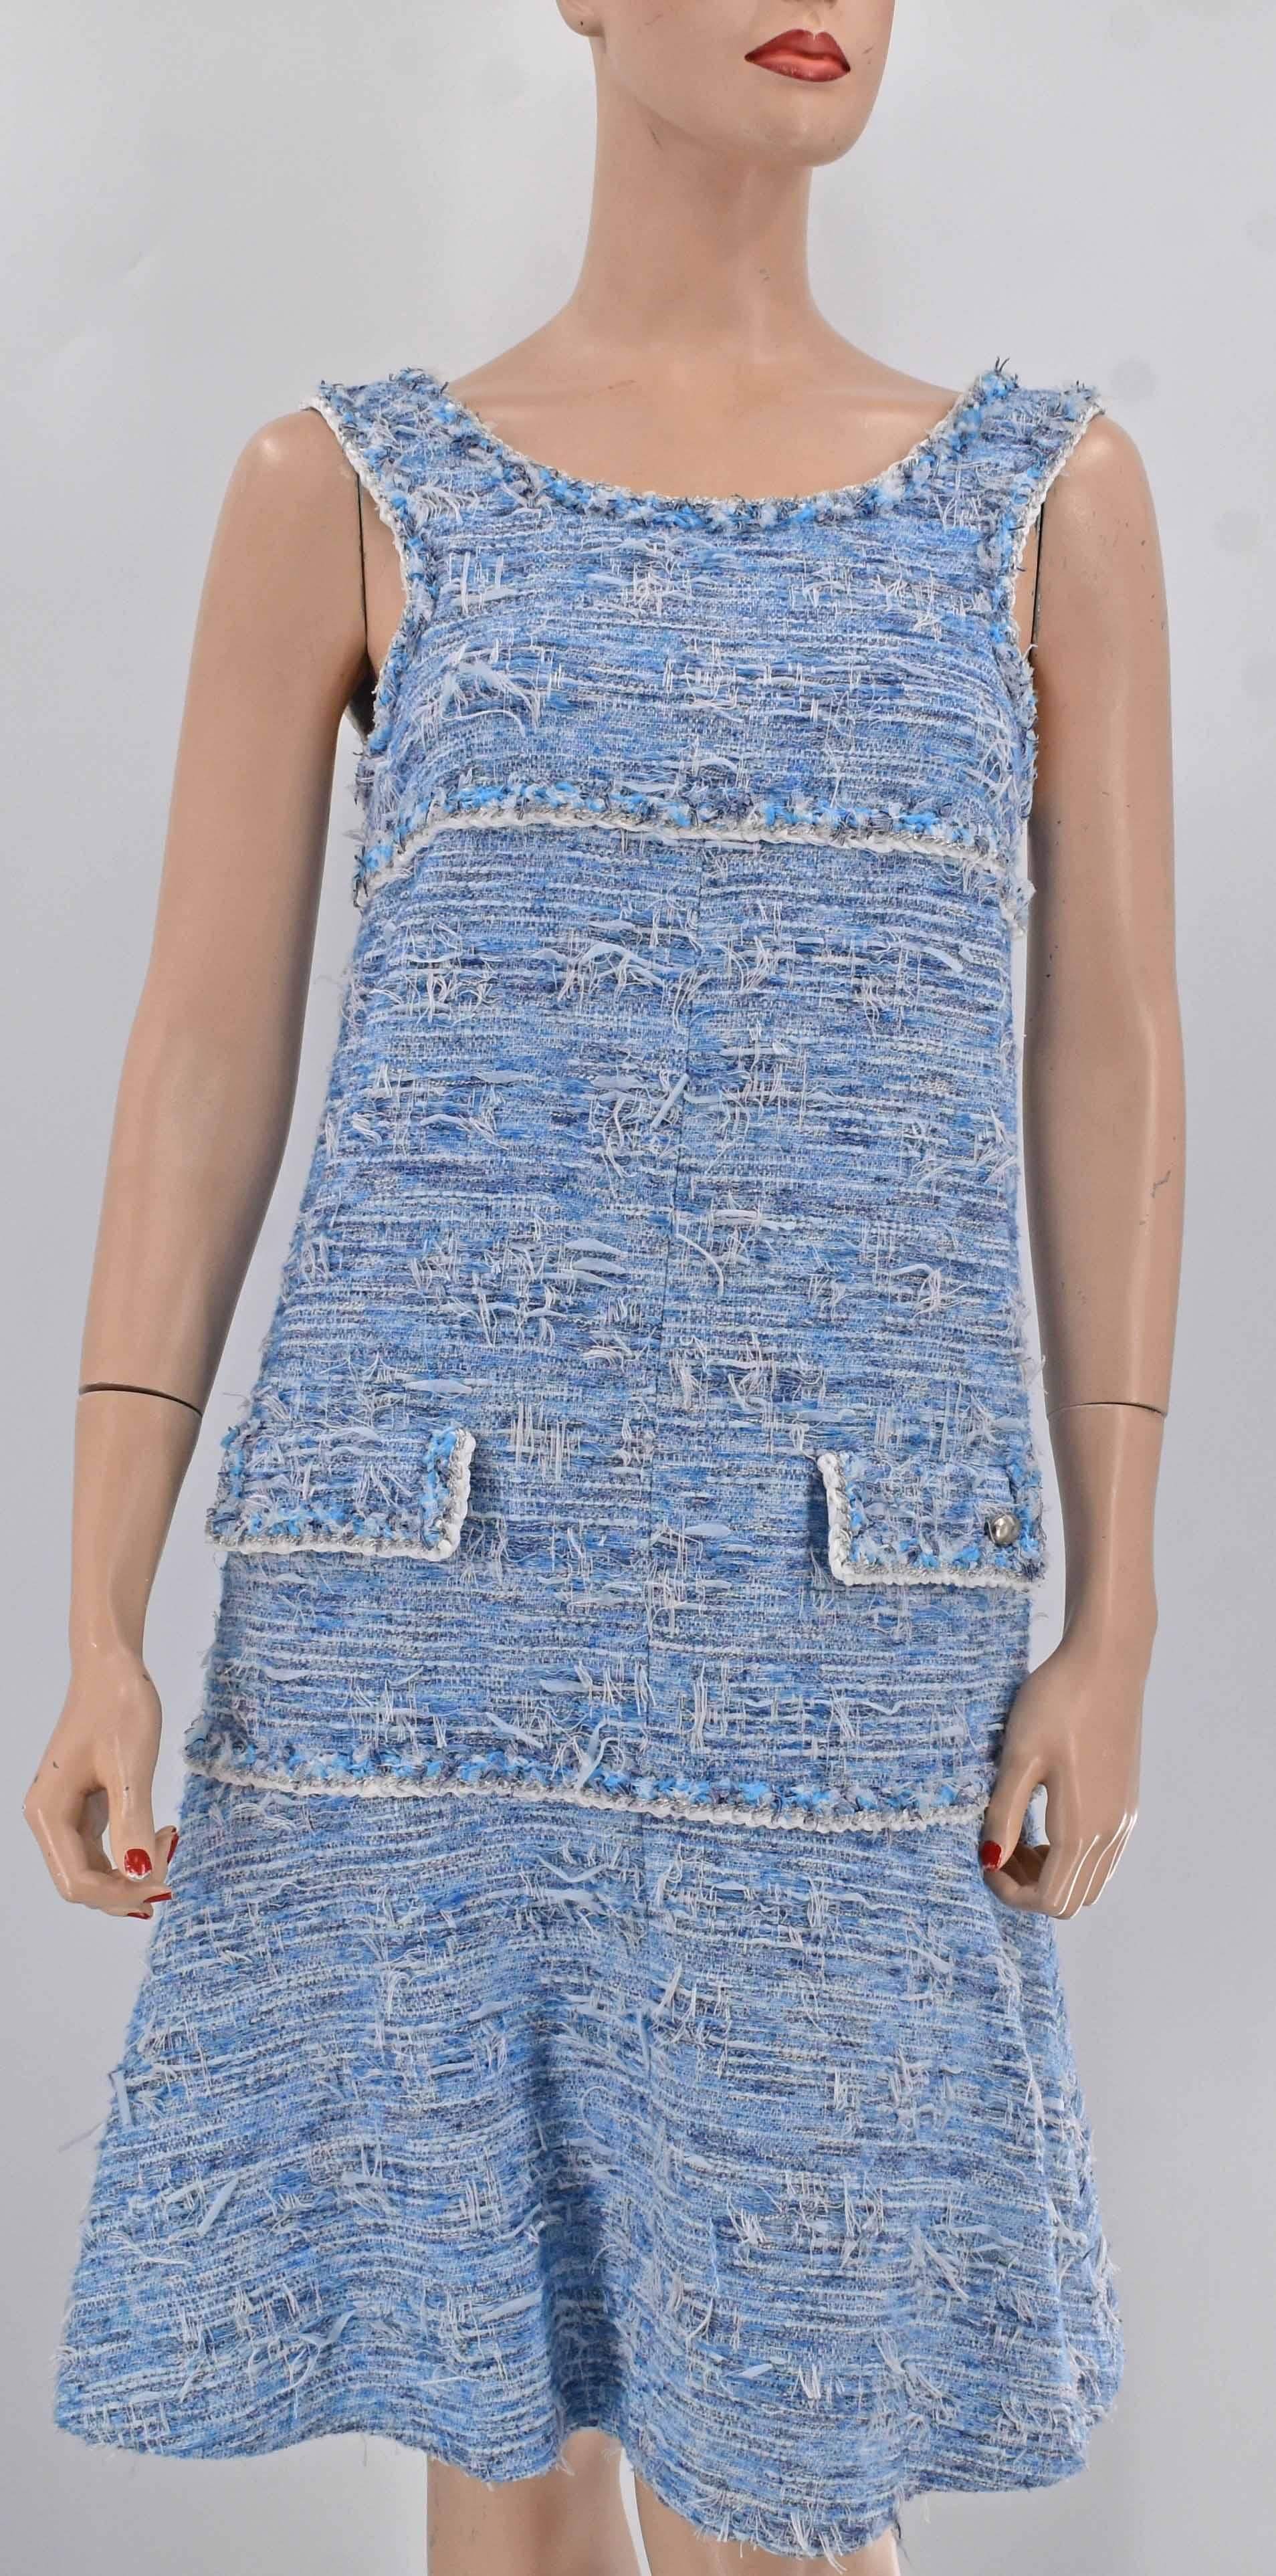 Chanel Fantasy Tweed Fringed Dress Spring 2015 15P Nwt Retails